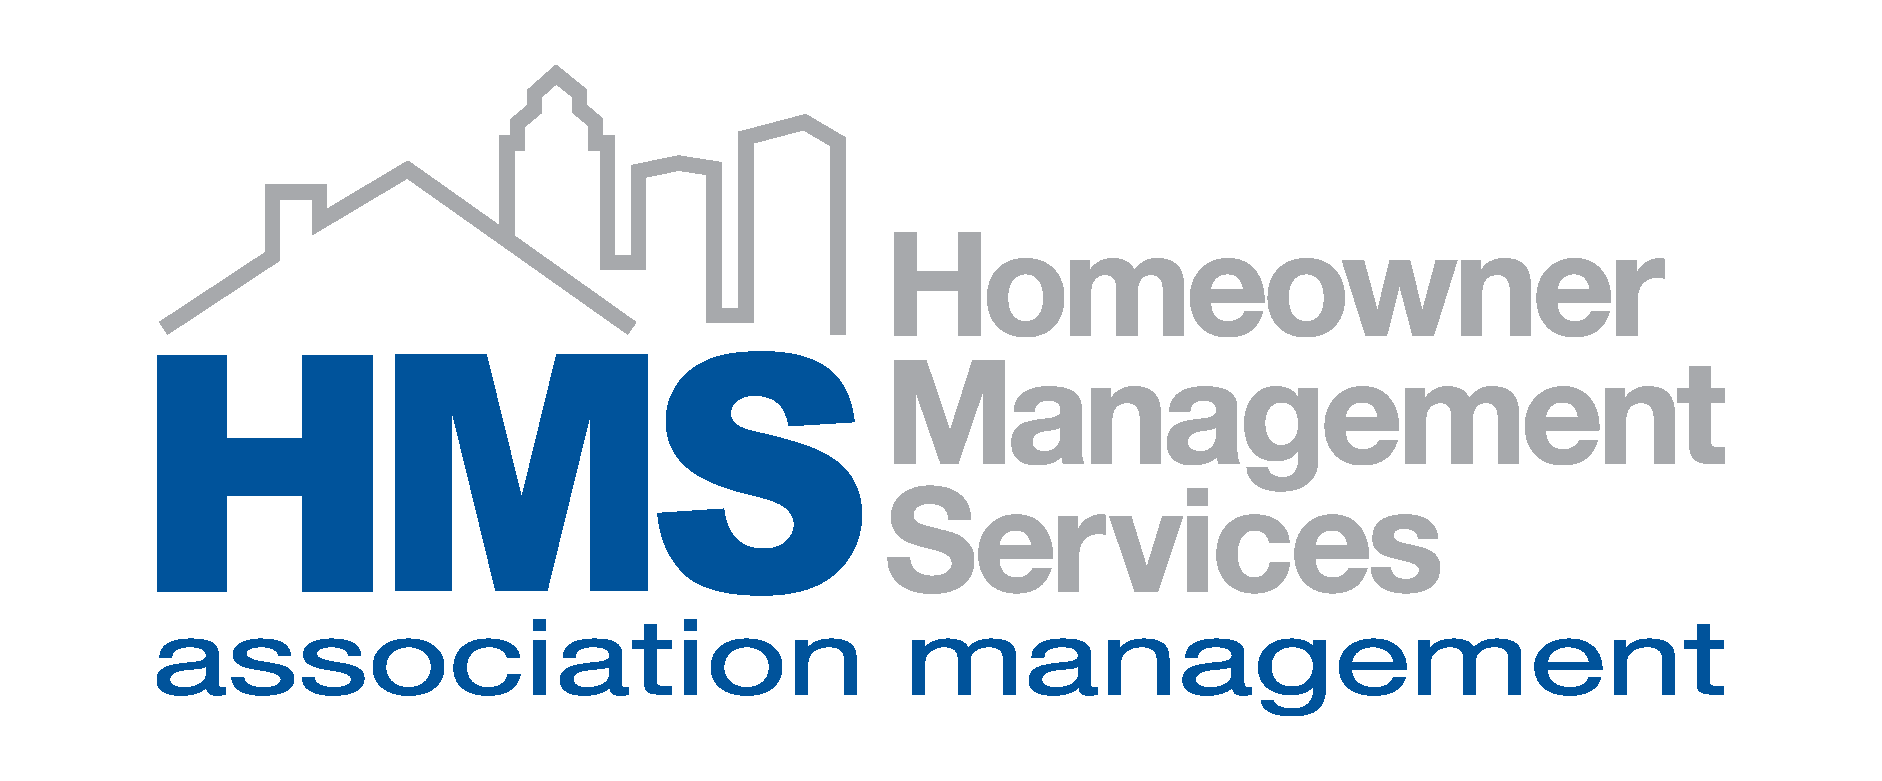 Homeowner Management Services Logo